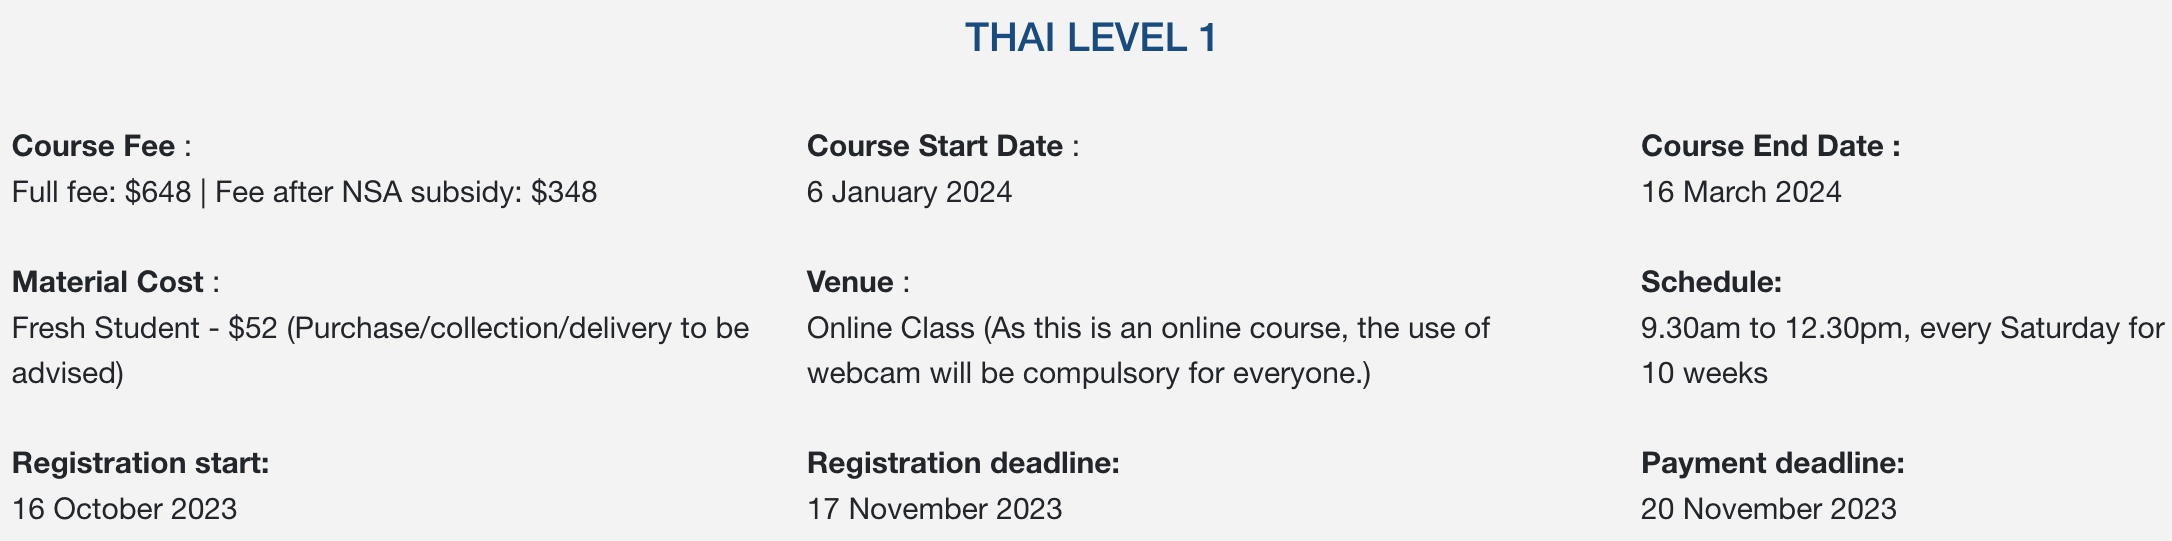 Screenshot of Level 1 Thai Course Description from NUS